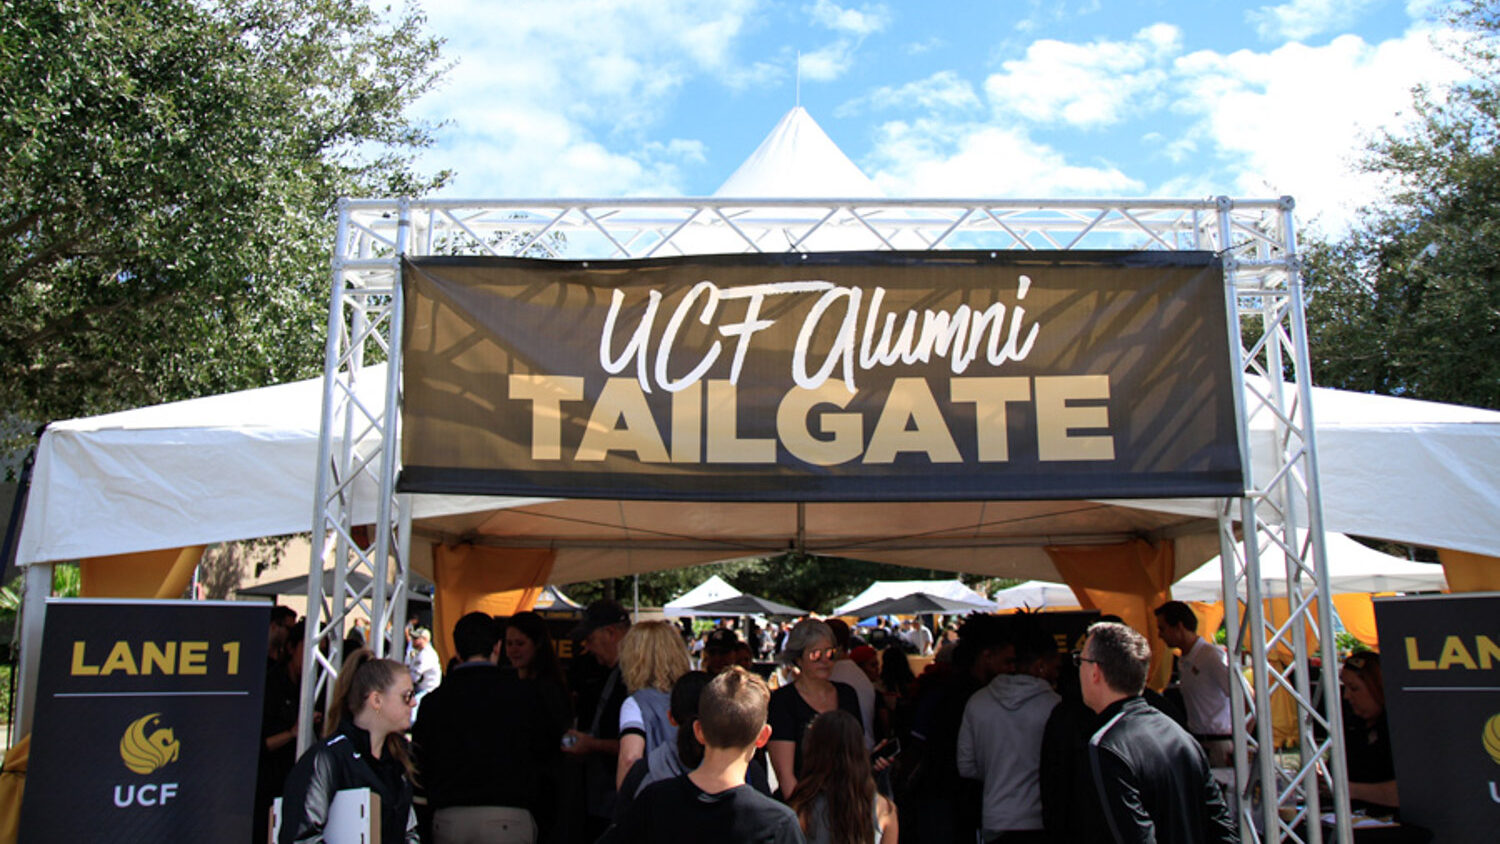 UCF Alumni Tailgate